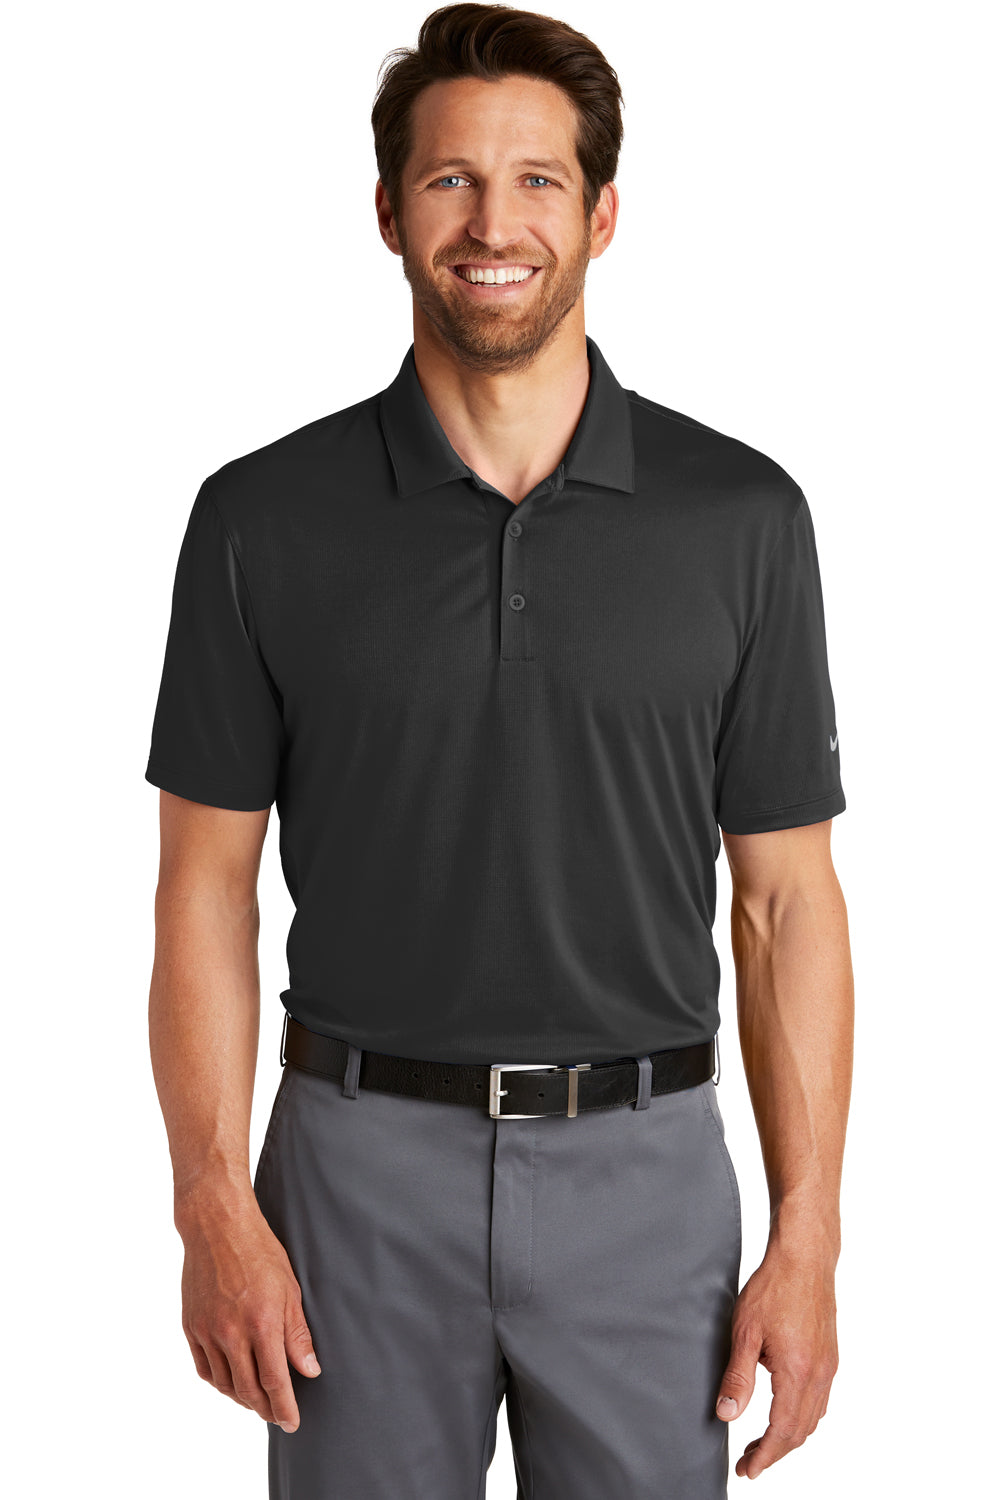 Nike 883681 Mens Legacy Dri-Fit Moisture Wicking Short Sleeve Polo Shirt Black Model Front